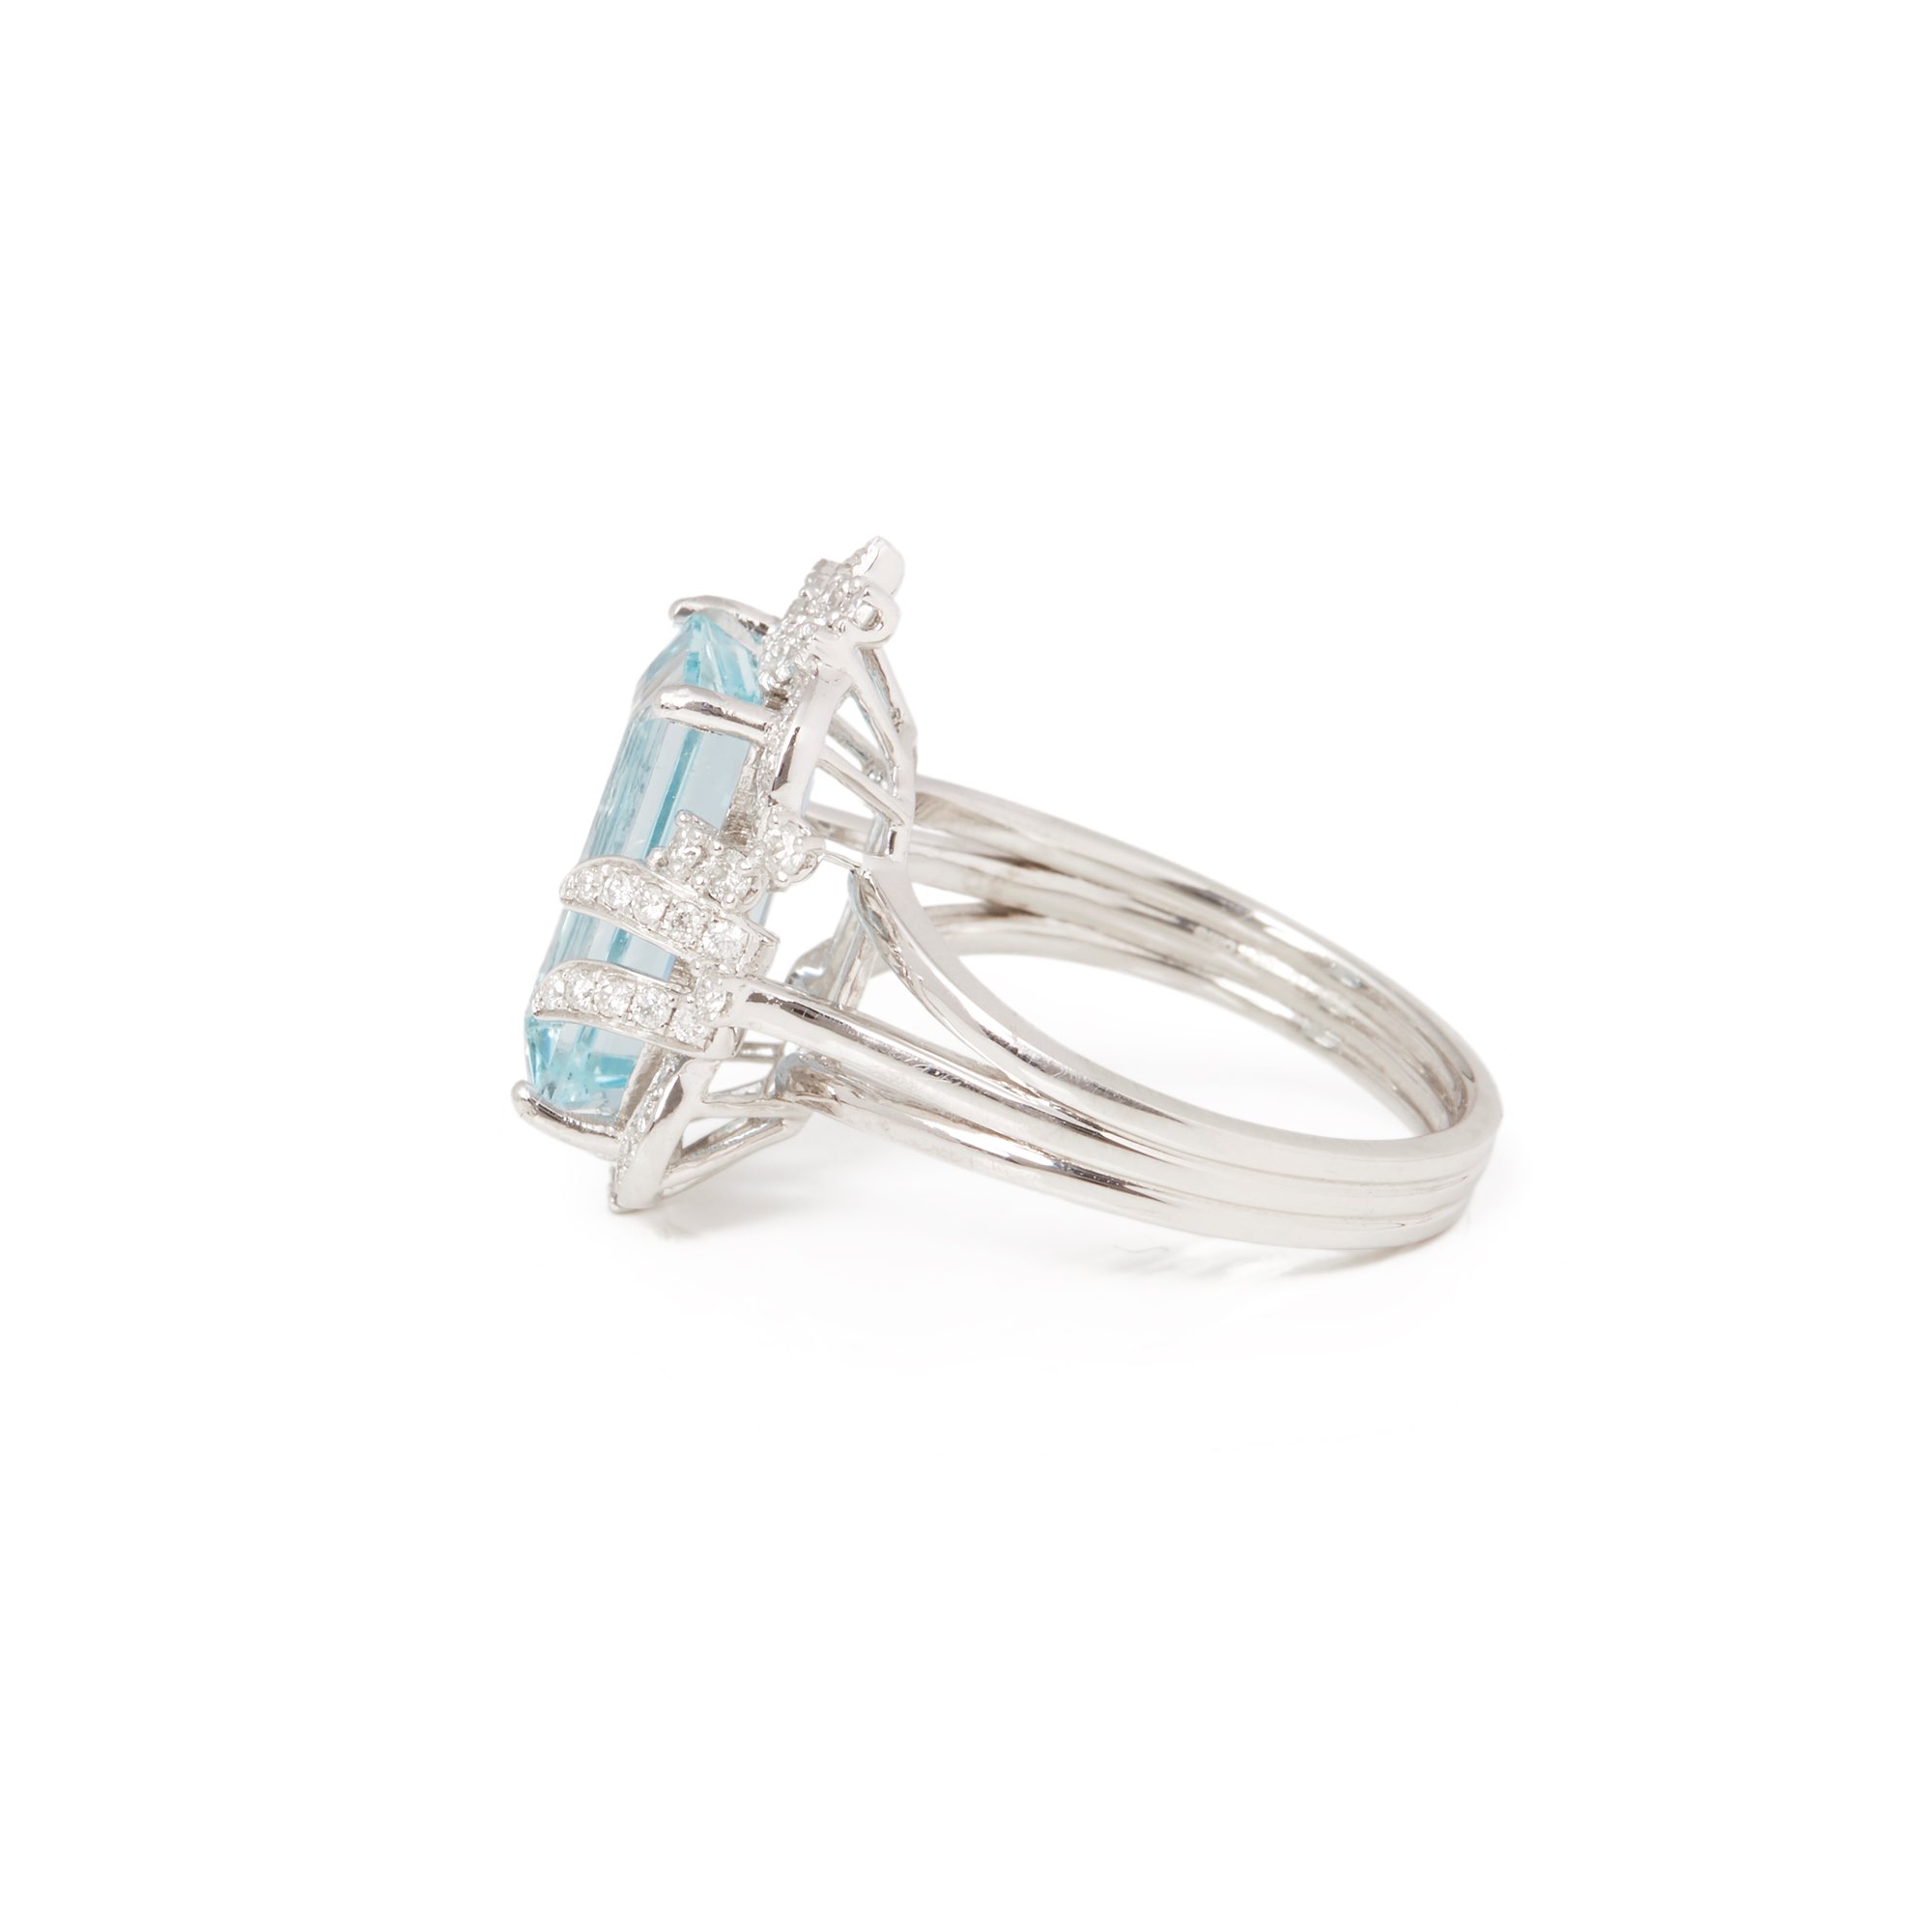 David Jerome Certified 4.9ct Emerald cut Aquamarine and Diamond Platinum Ring